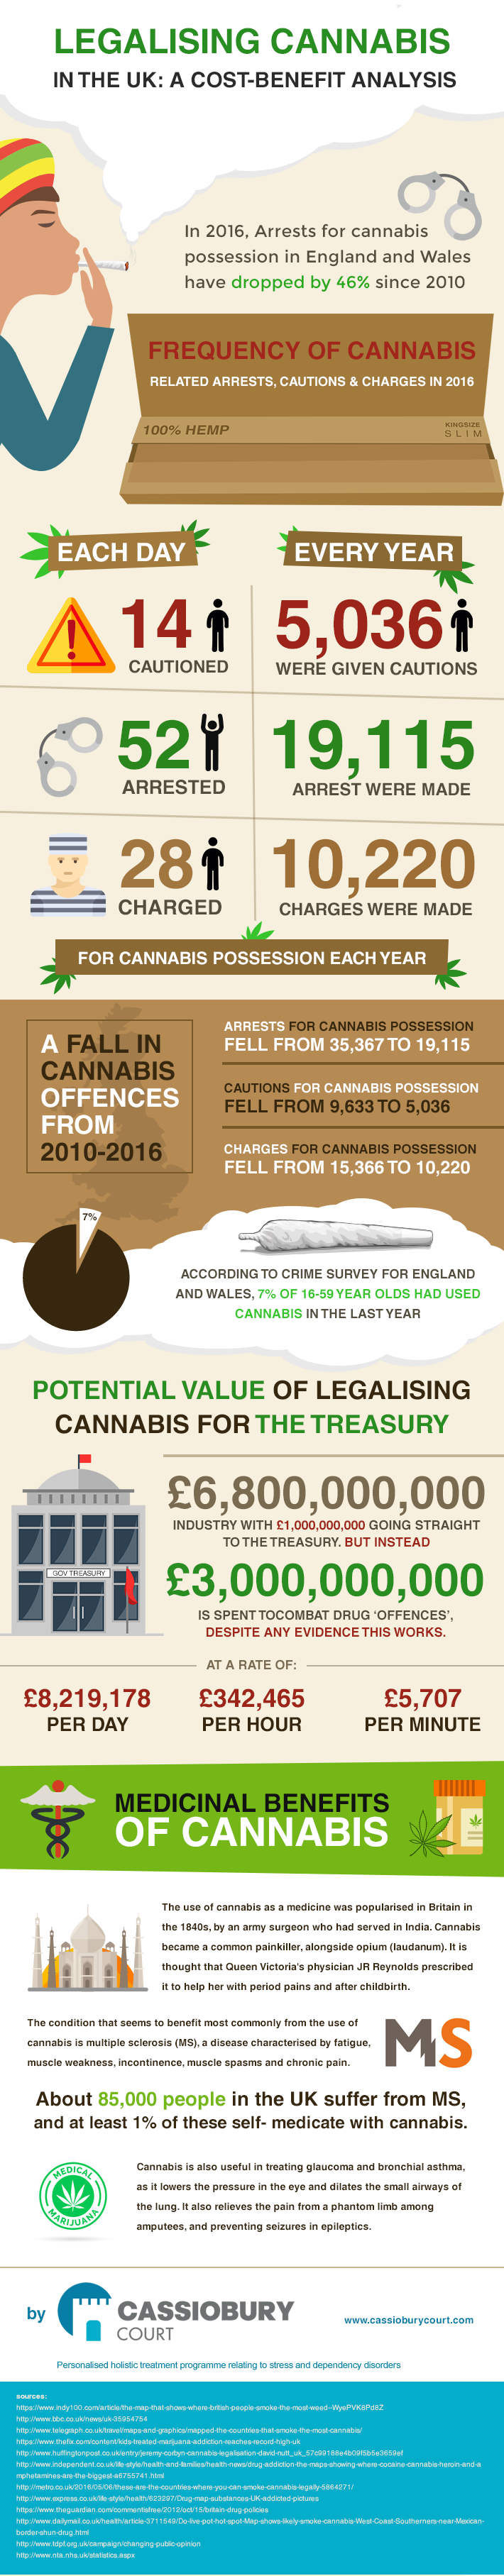 Cannabis Cost Benefit Analysis U.K.